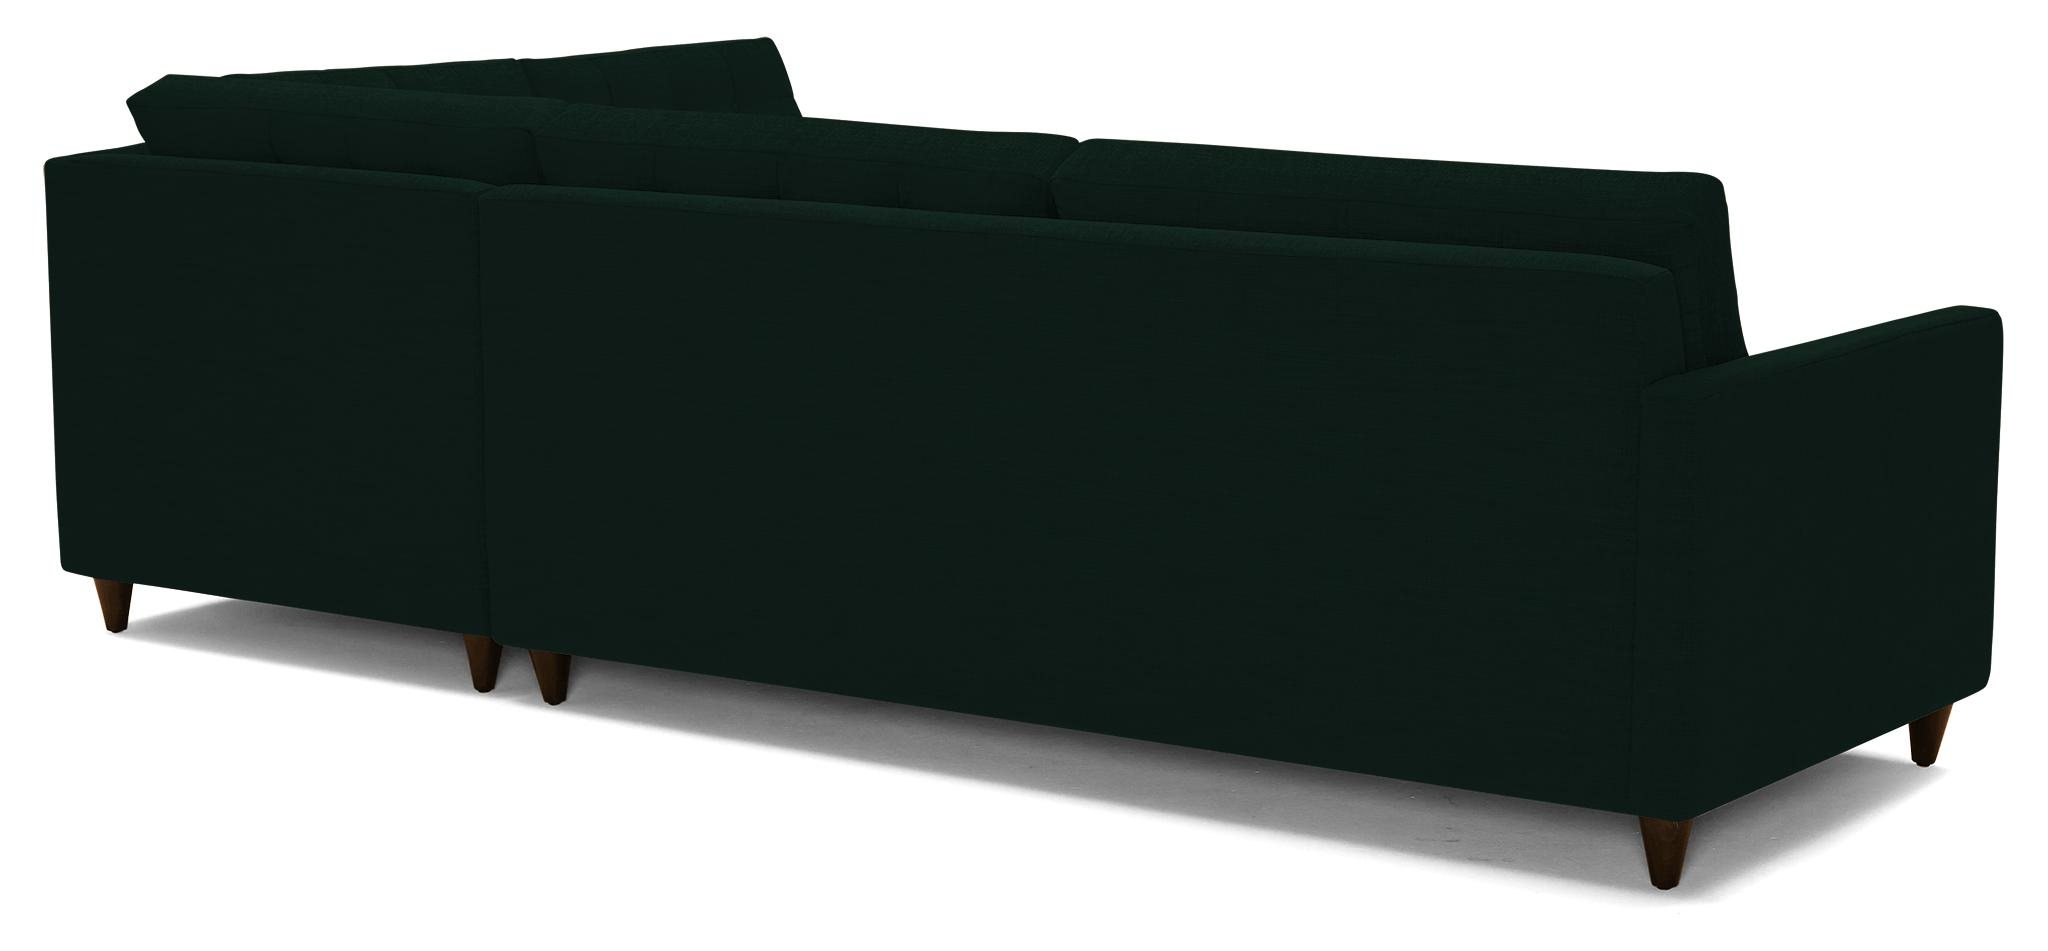 Green Eliot Mid Century Modern Bumper Sleeper Sectional - Royale Evergreen - Mocha - Left - Image 3